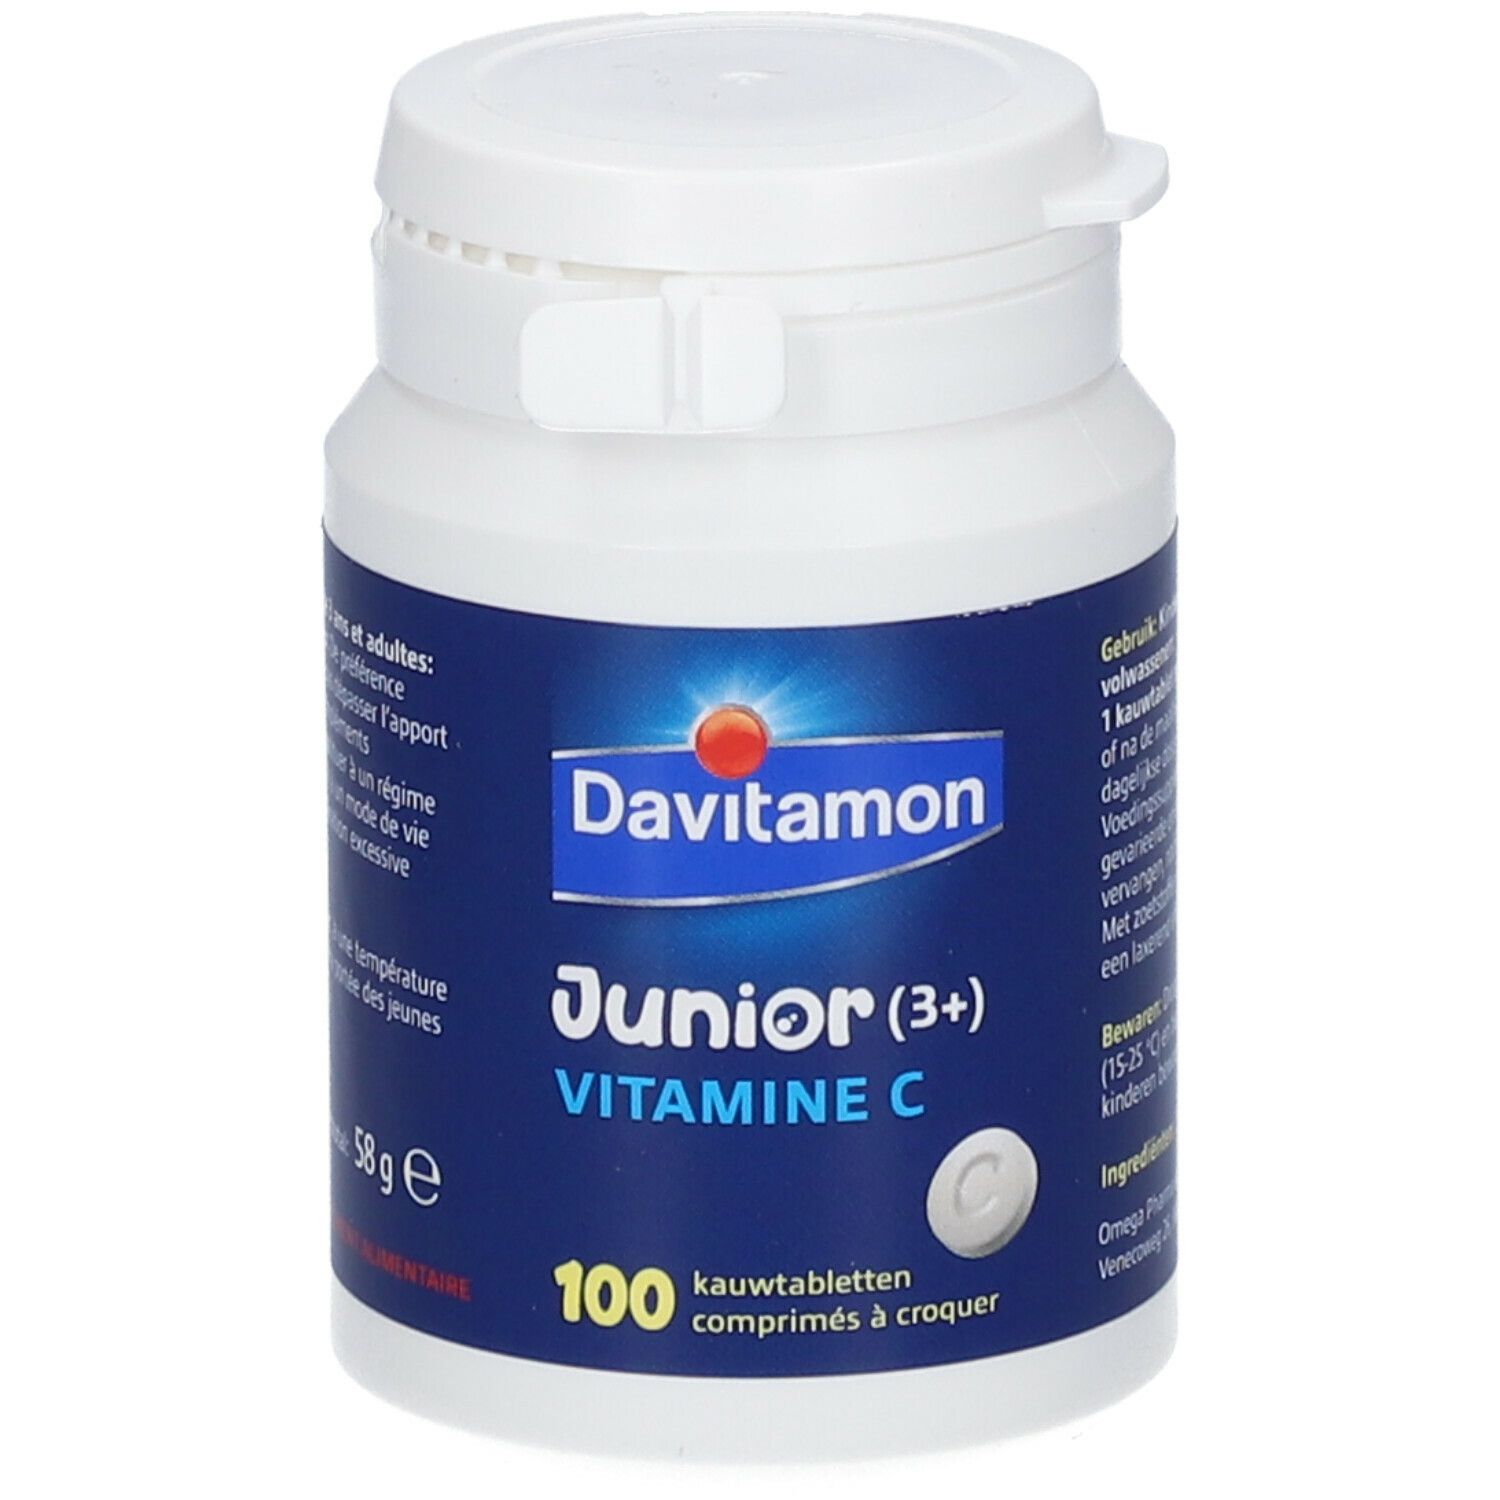 Image of Davitamon Junior Vitamin C